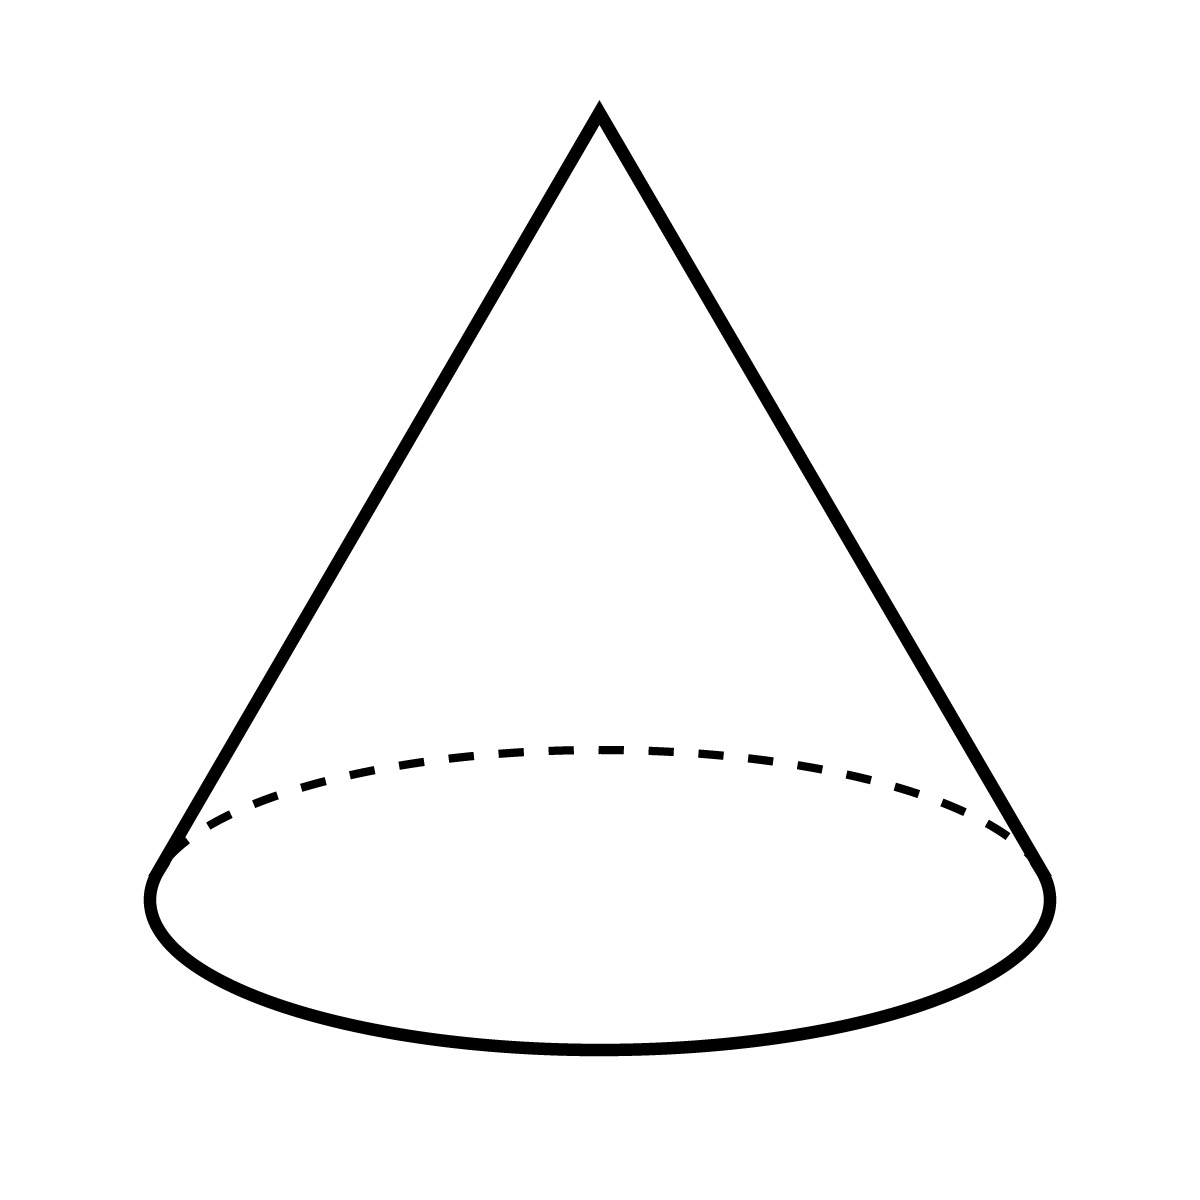 3d Pyramid Clipart.